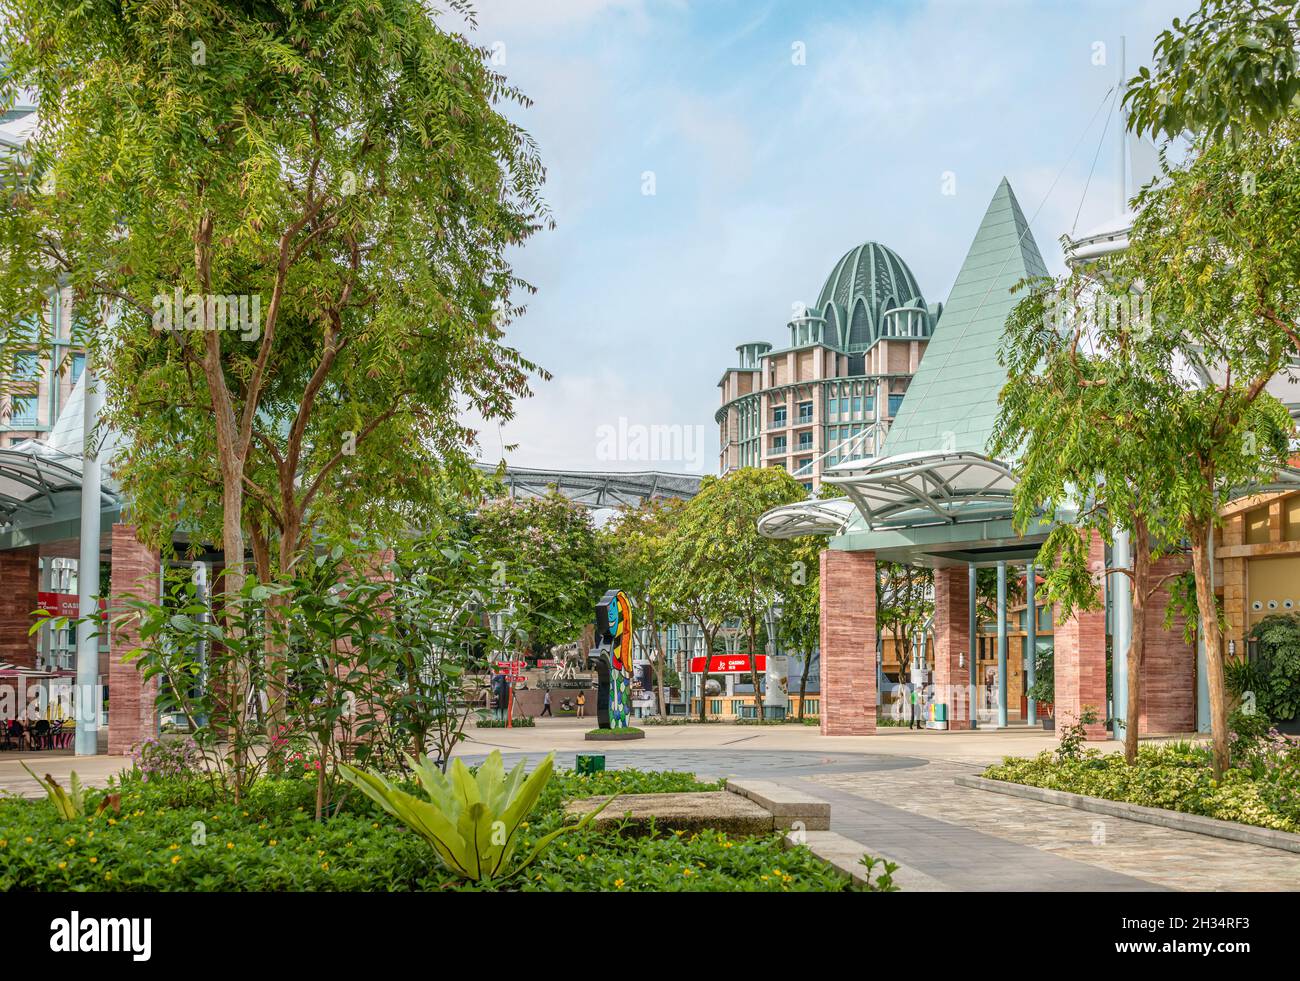 Merlion Plaza shopping mall at Sentosa Island, Singapore Stock Photo